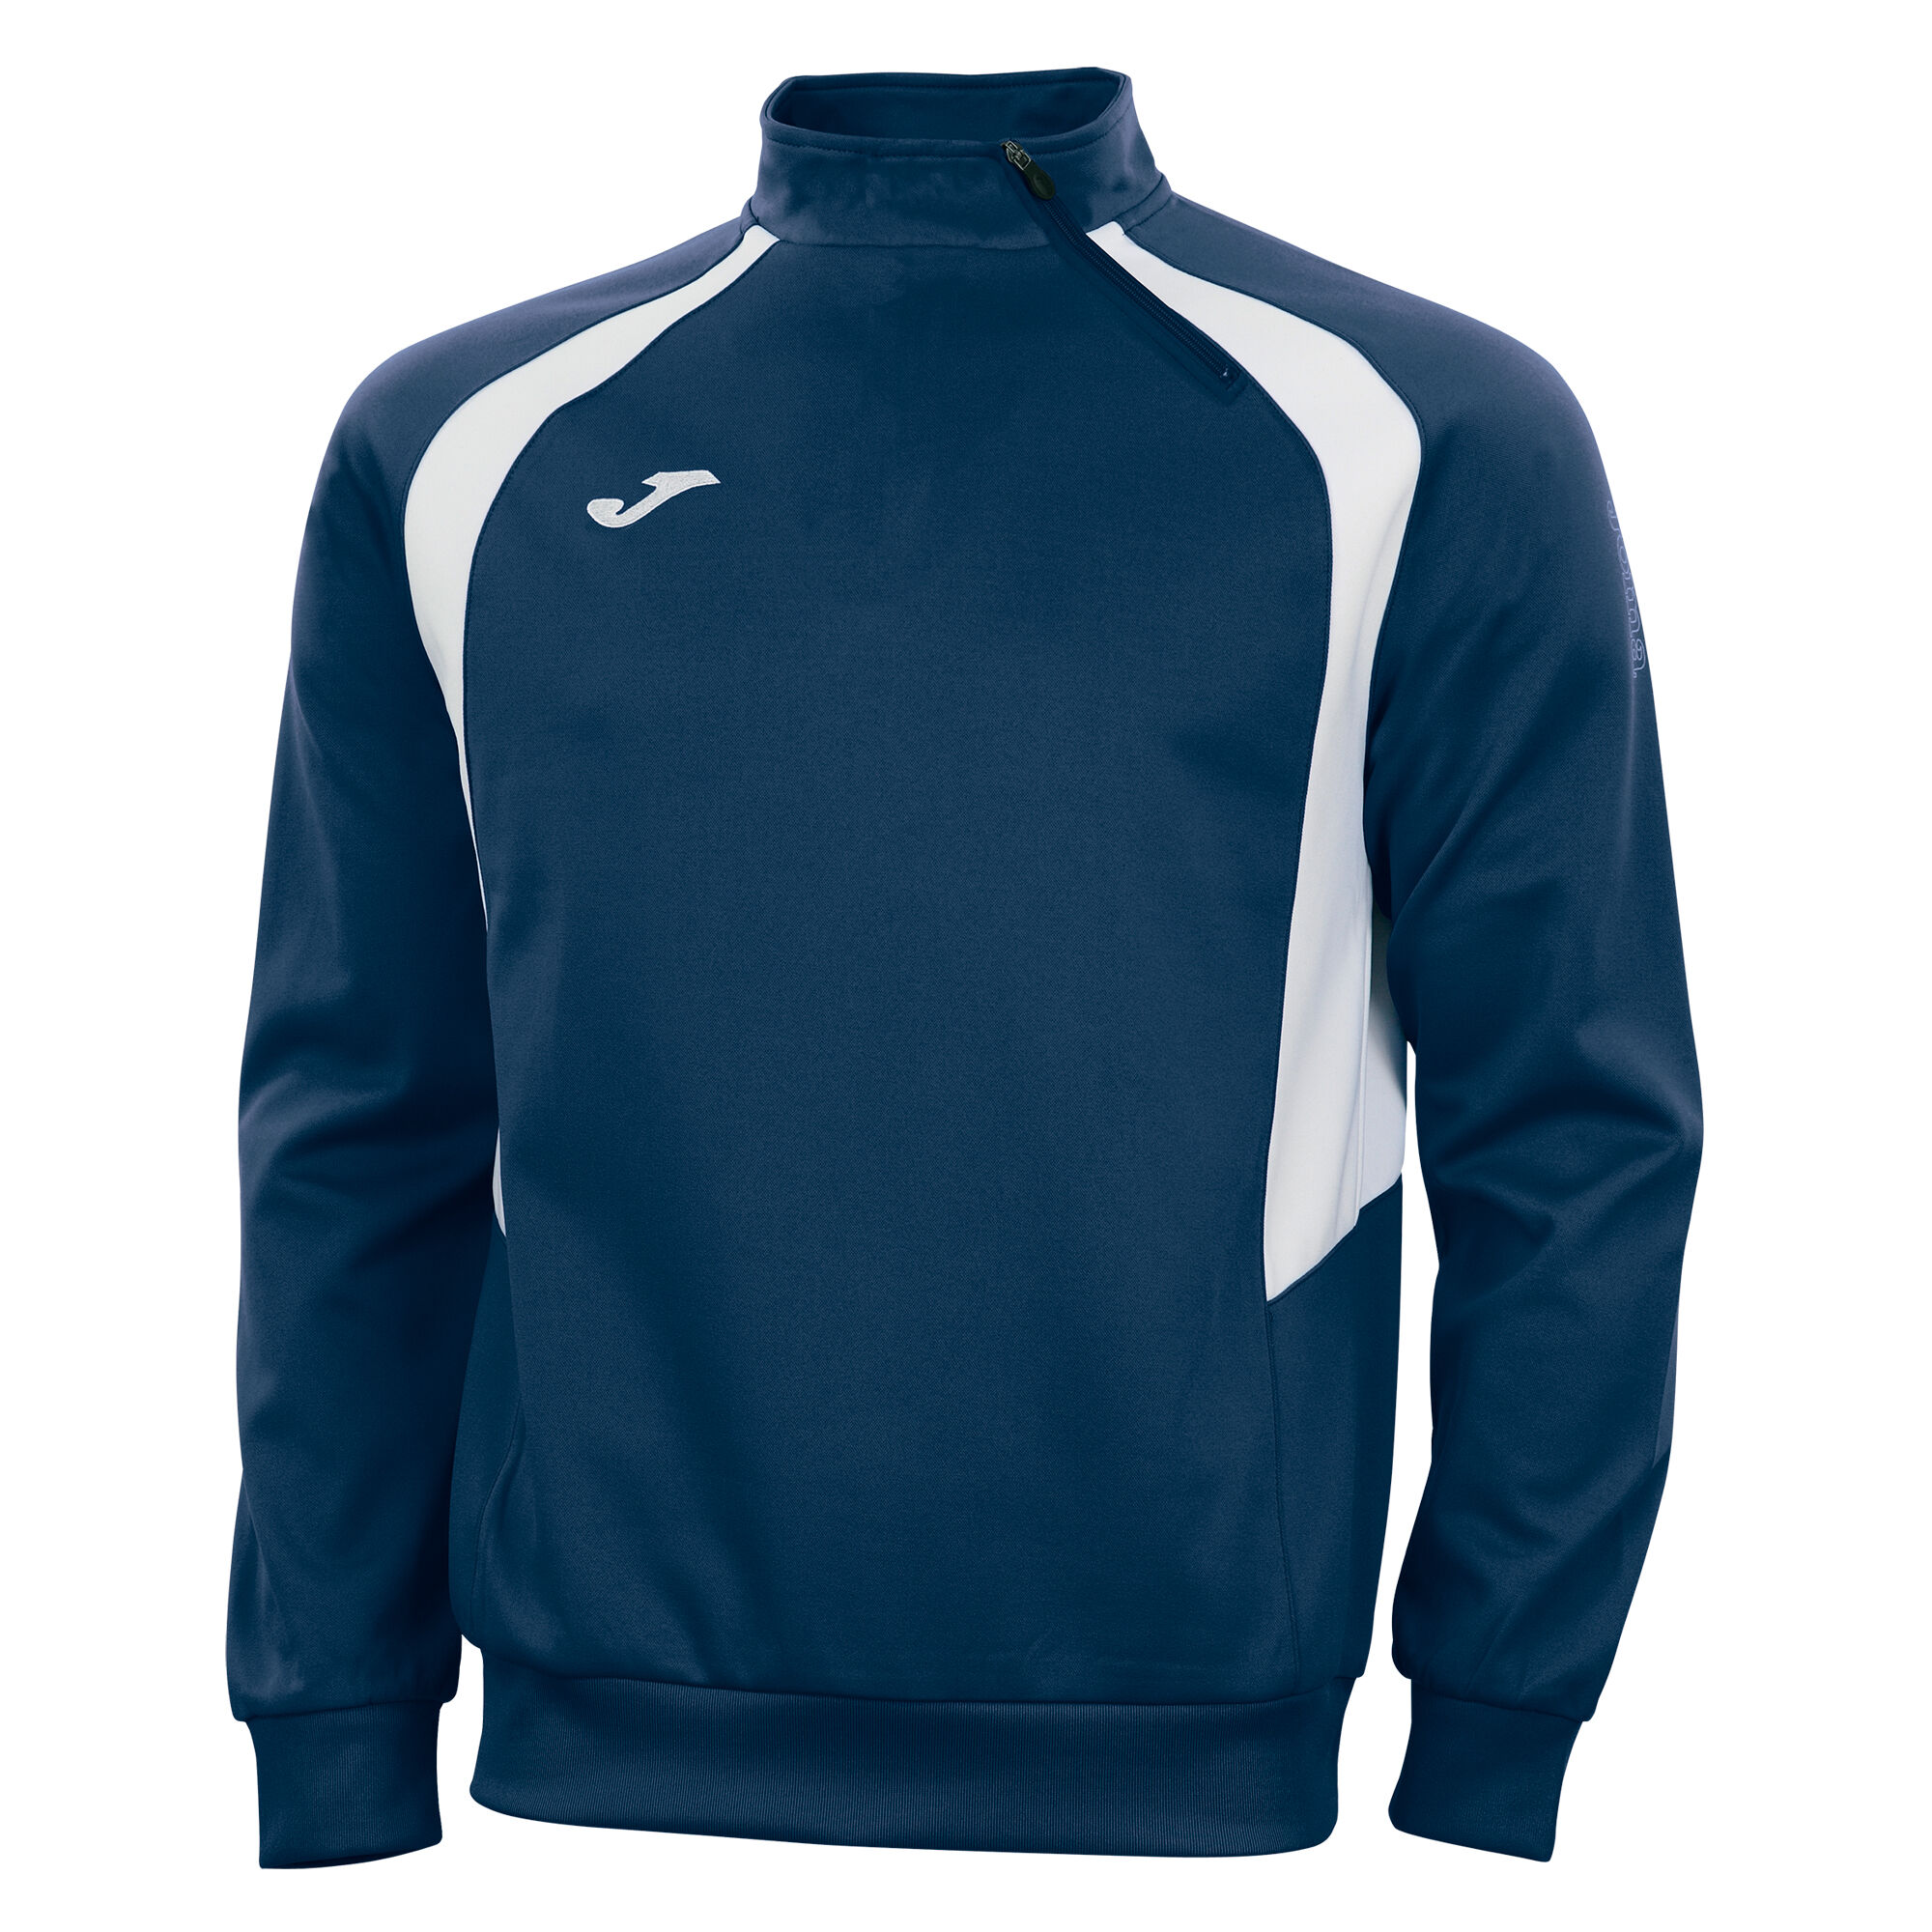 Sweatshirt Championship navy blue white